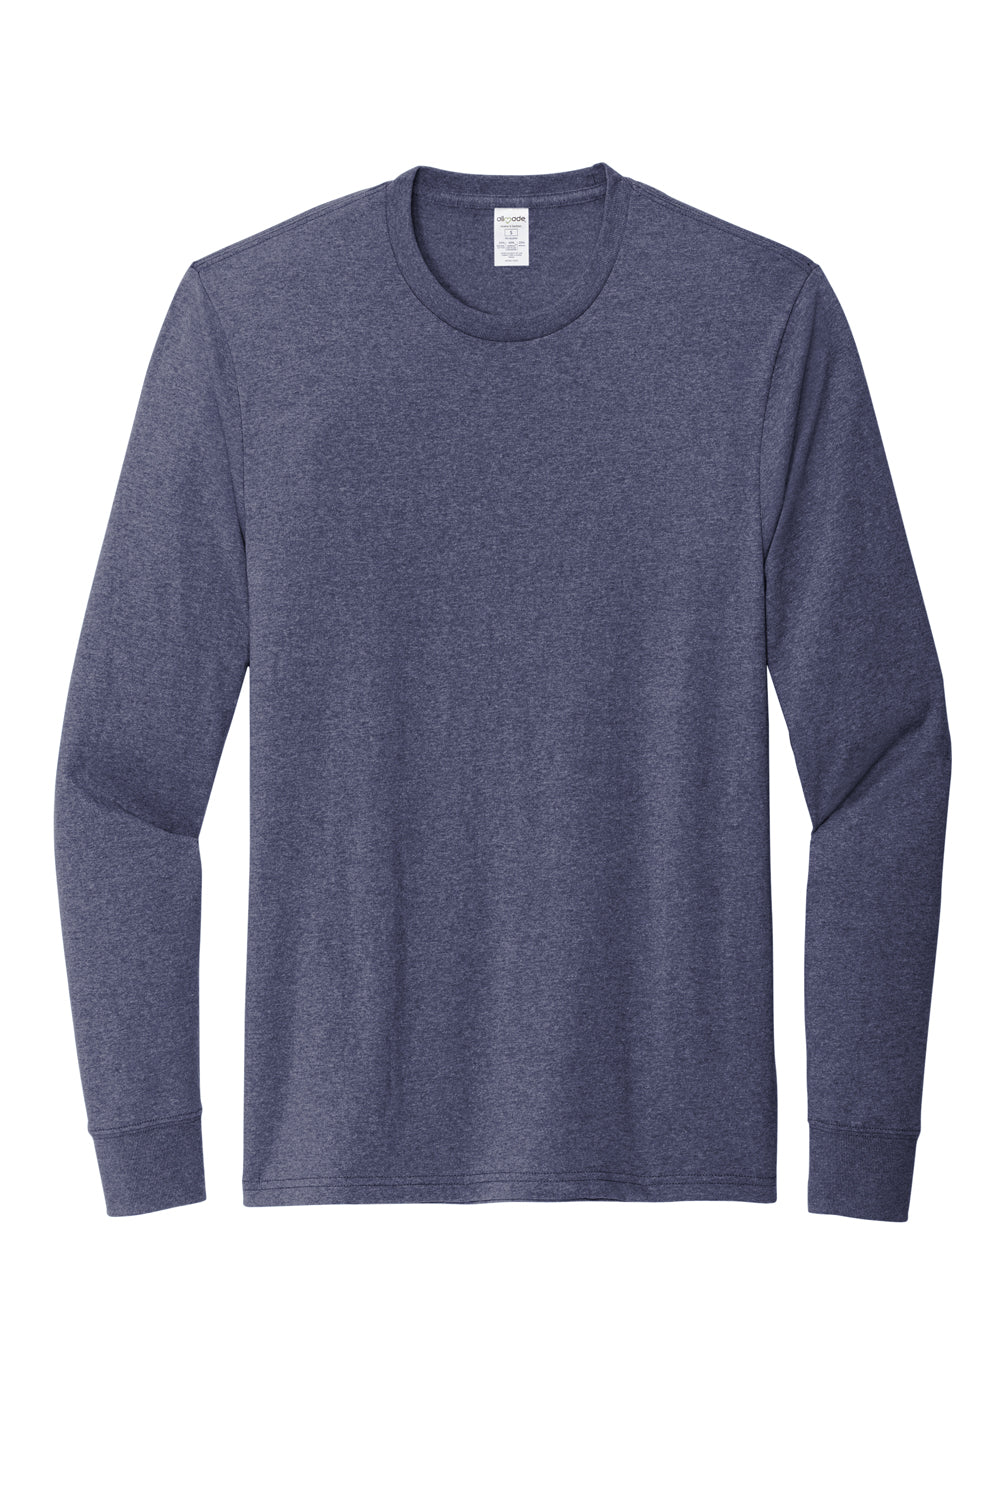 Allmade AL6204 Mens Recycled Long Sleeve Crewneck T-Shirt Heather Navy Blue Flat Front